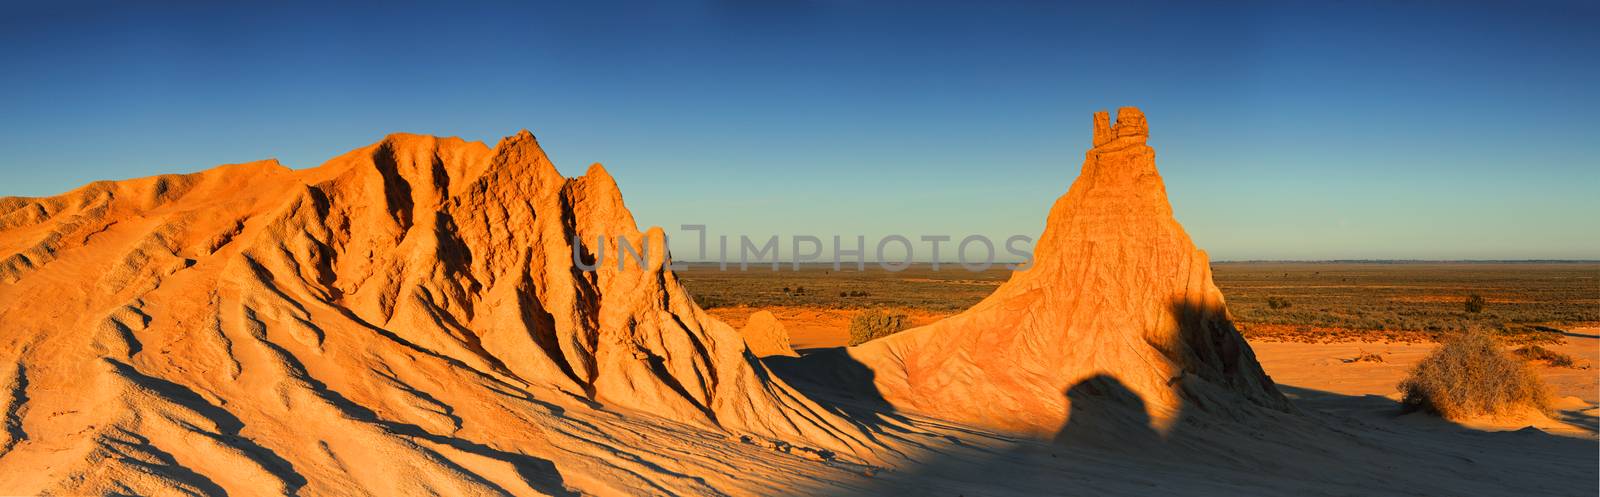 Desert Landscape outback Australia by lovleah